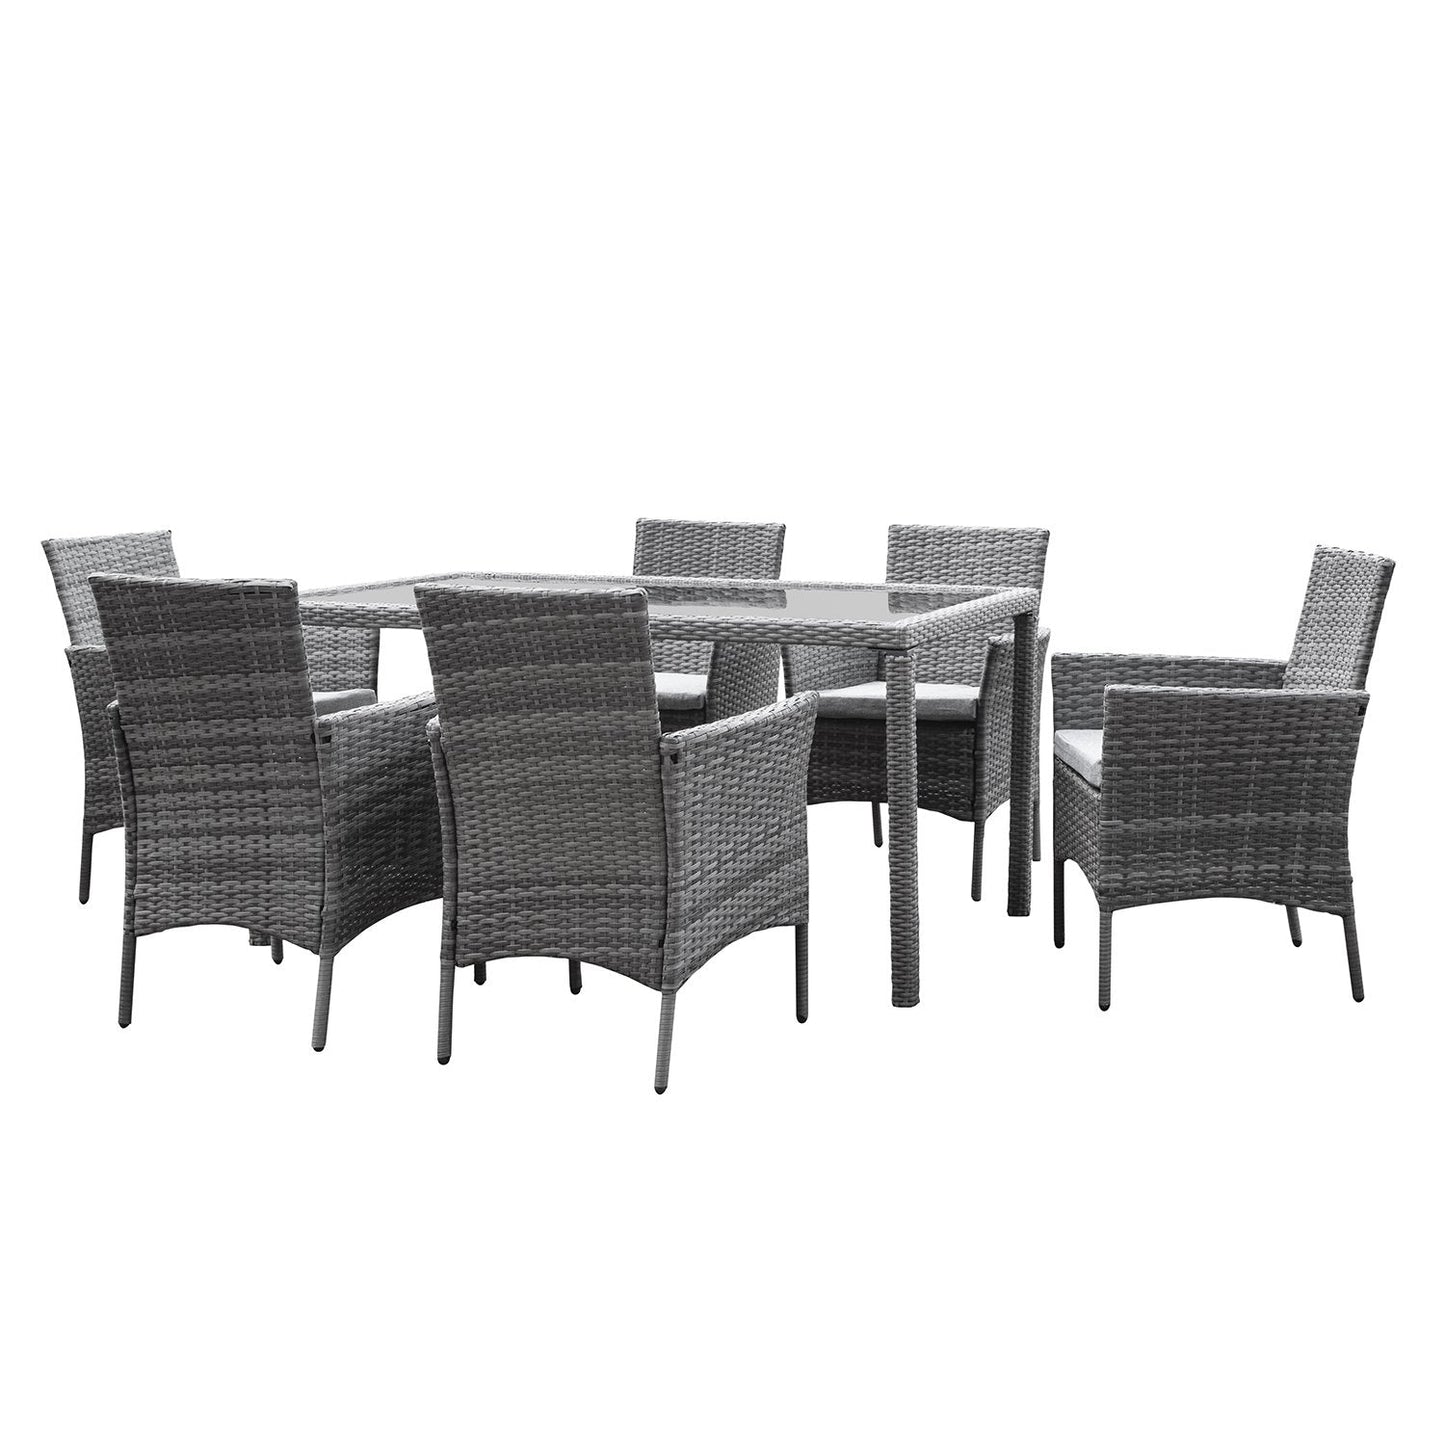 Marston 6 Seater Rattan Dining Set with Grey Parasol - Rattan Garden Furniture - Grey